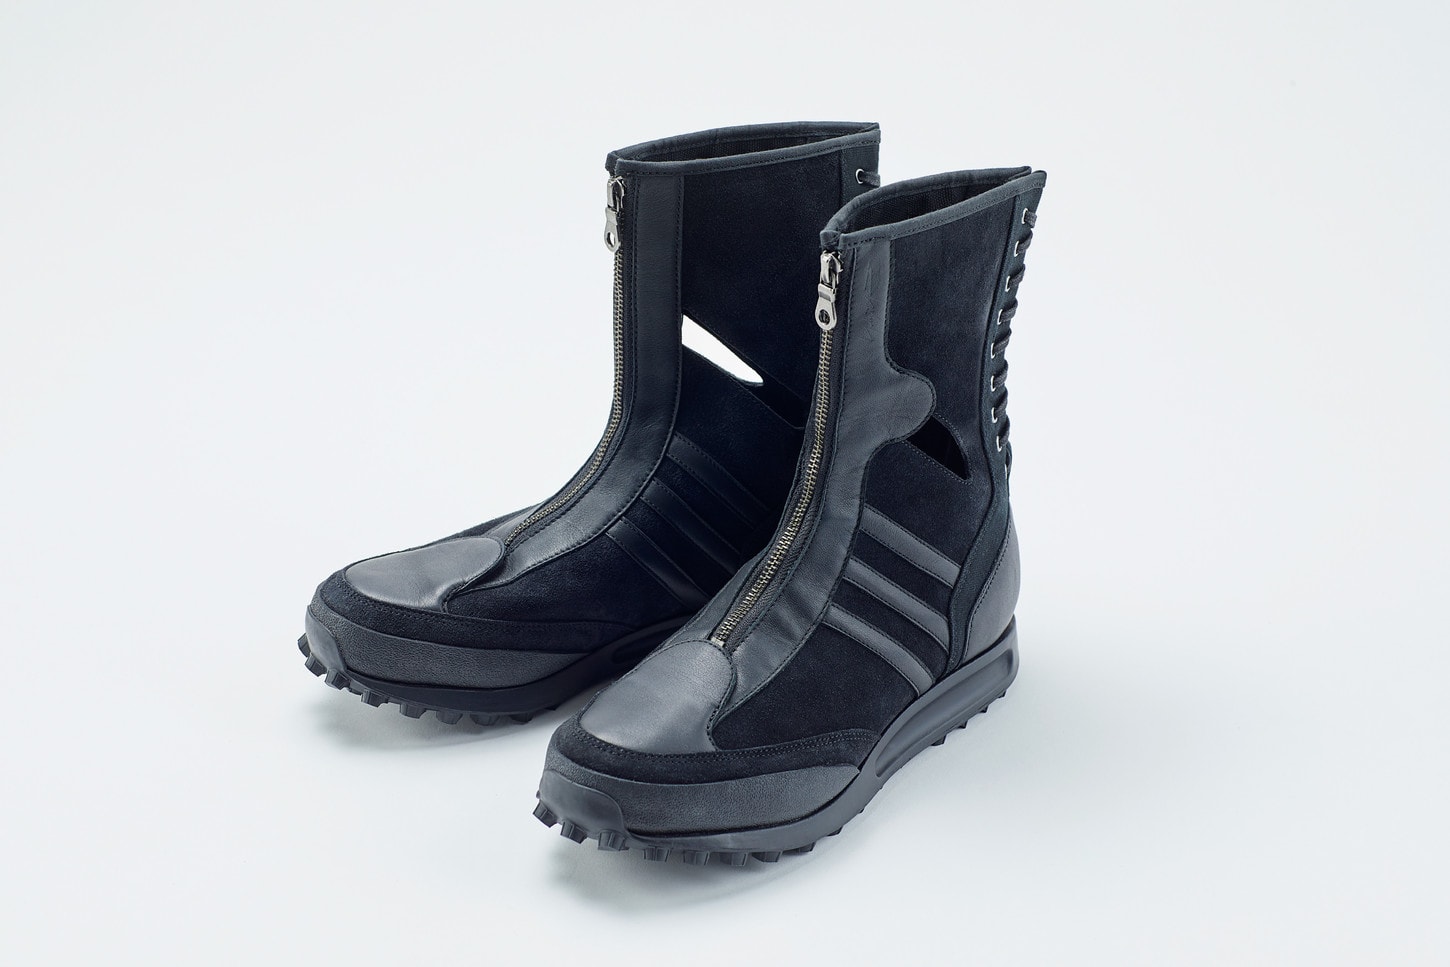 Yohji Yamamoto adidas sneaker Trail Boot Y-3 Yohji Yamamoto Japan fashion designer boots hiking shoes footwear mainline collection fall winter 2018 TRAXION black leather suede august 17